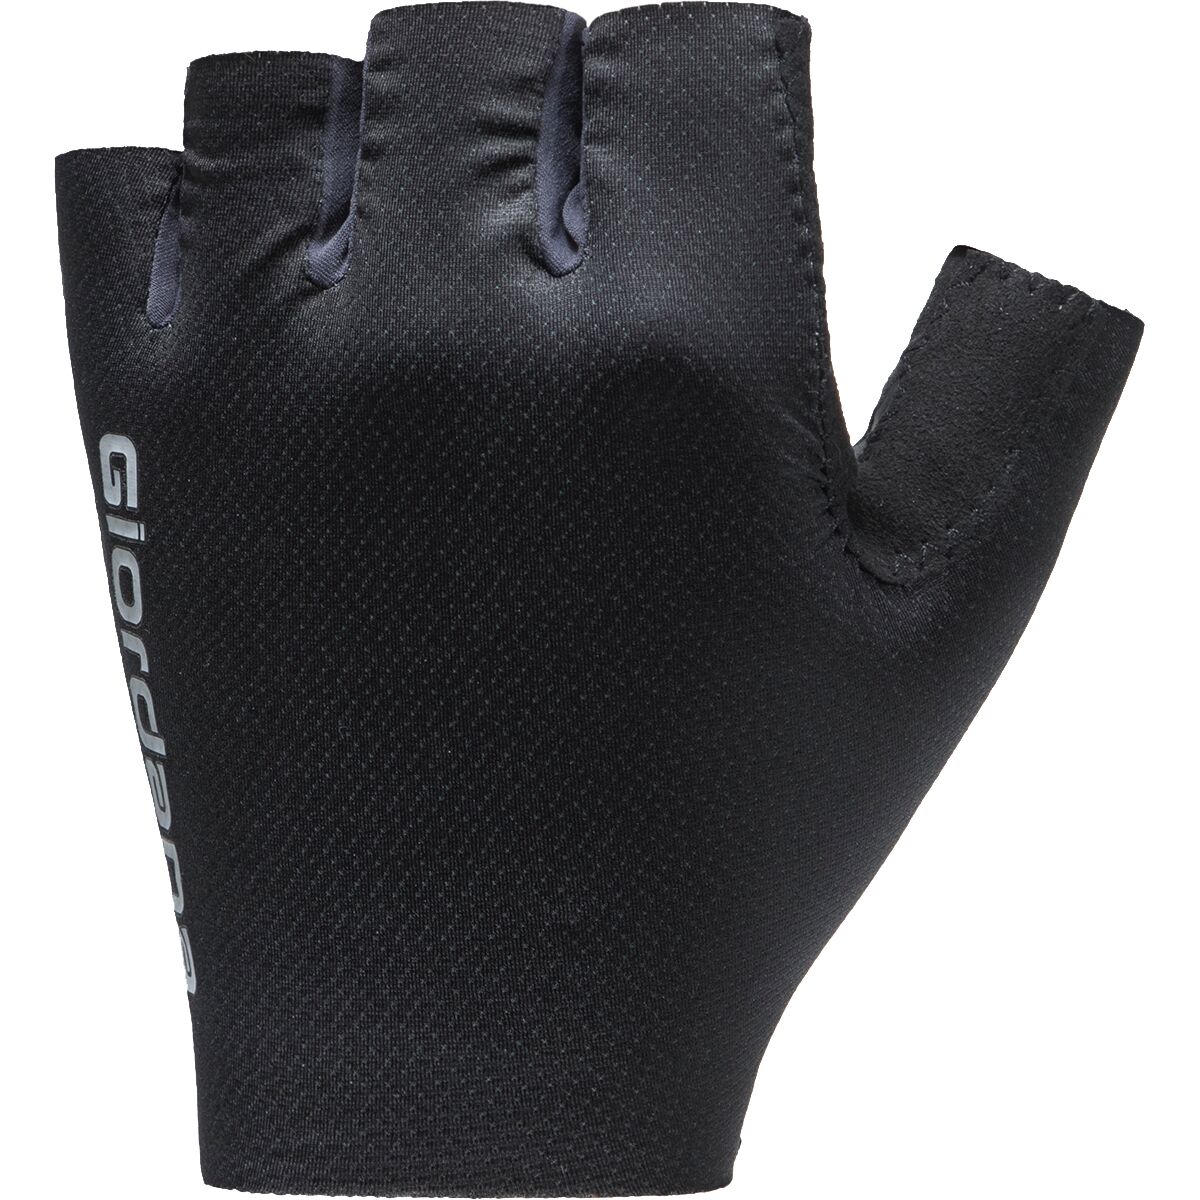 Giordana Versa Summer Glove - Men's